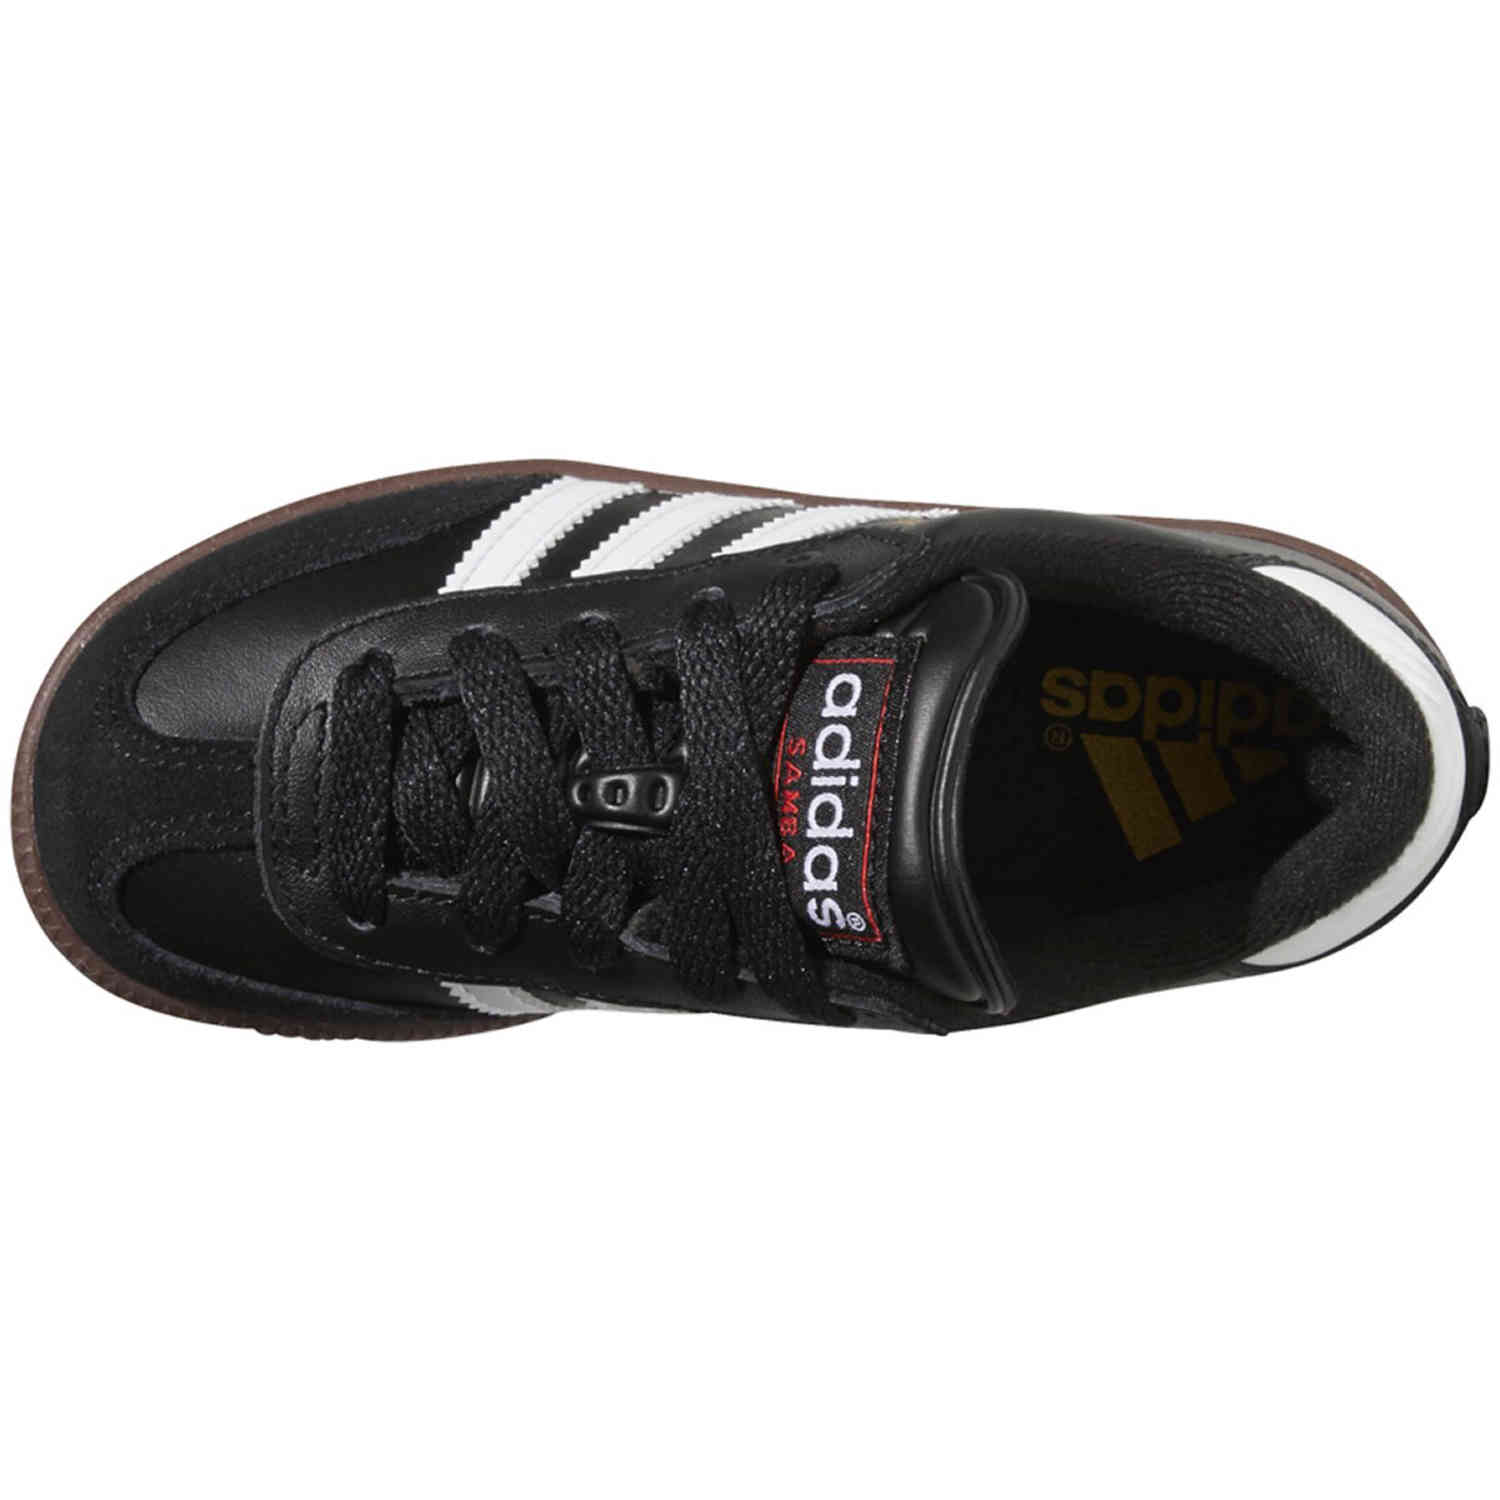 Adidas Samba Classic Soccer Shoes White-Black - 11.5